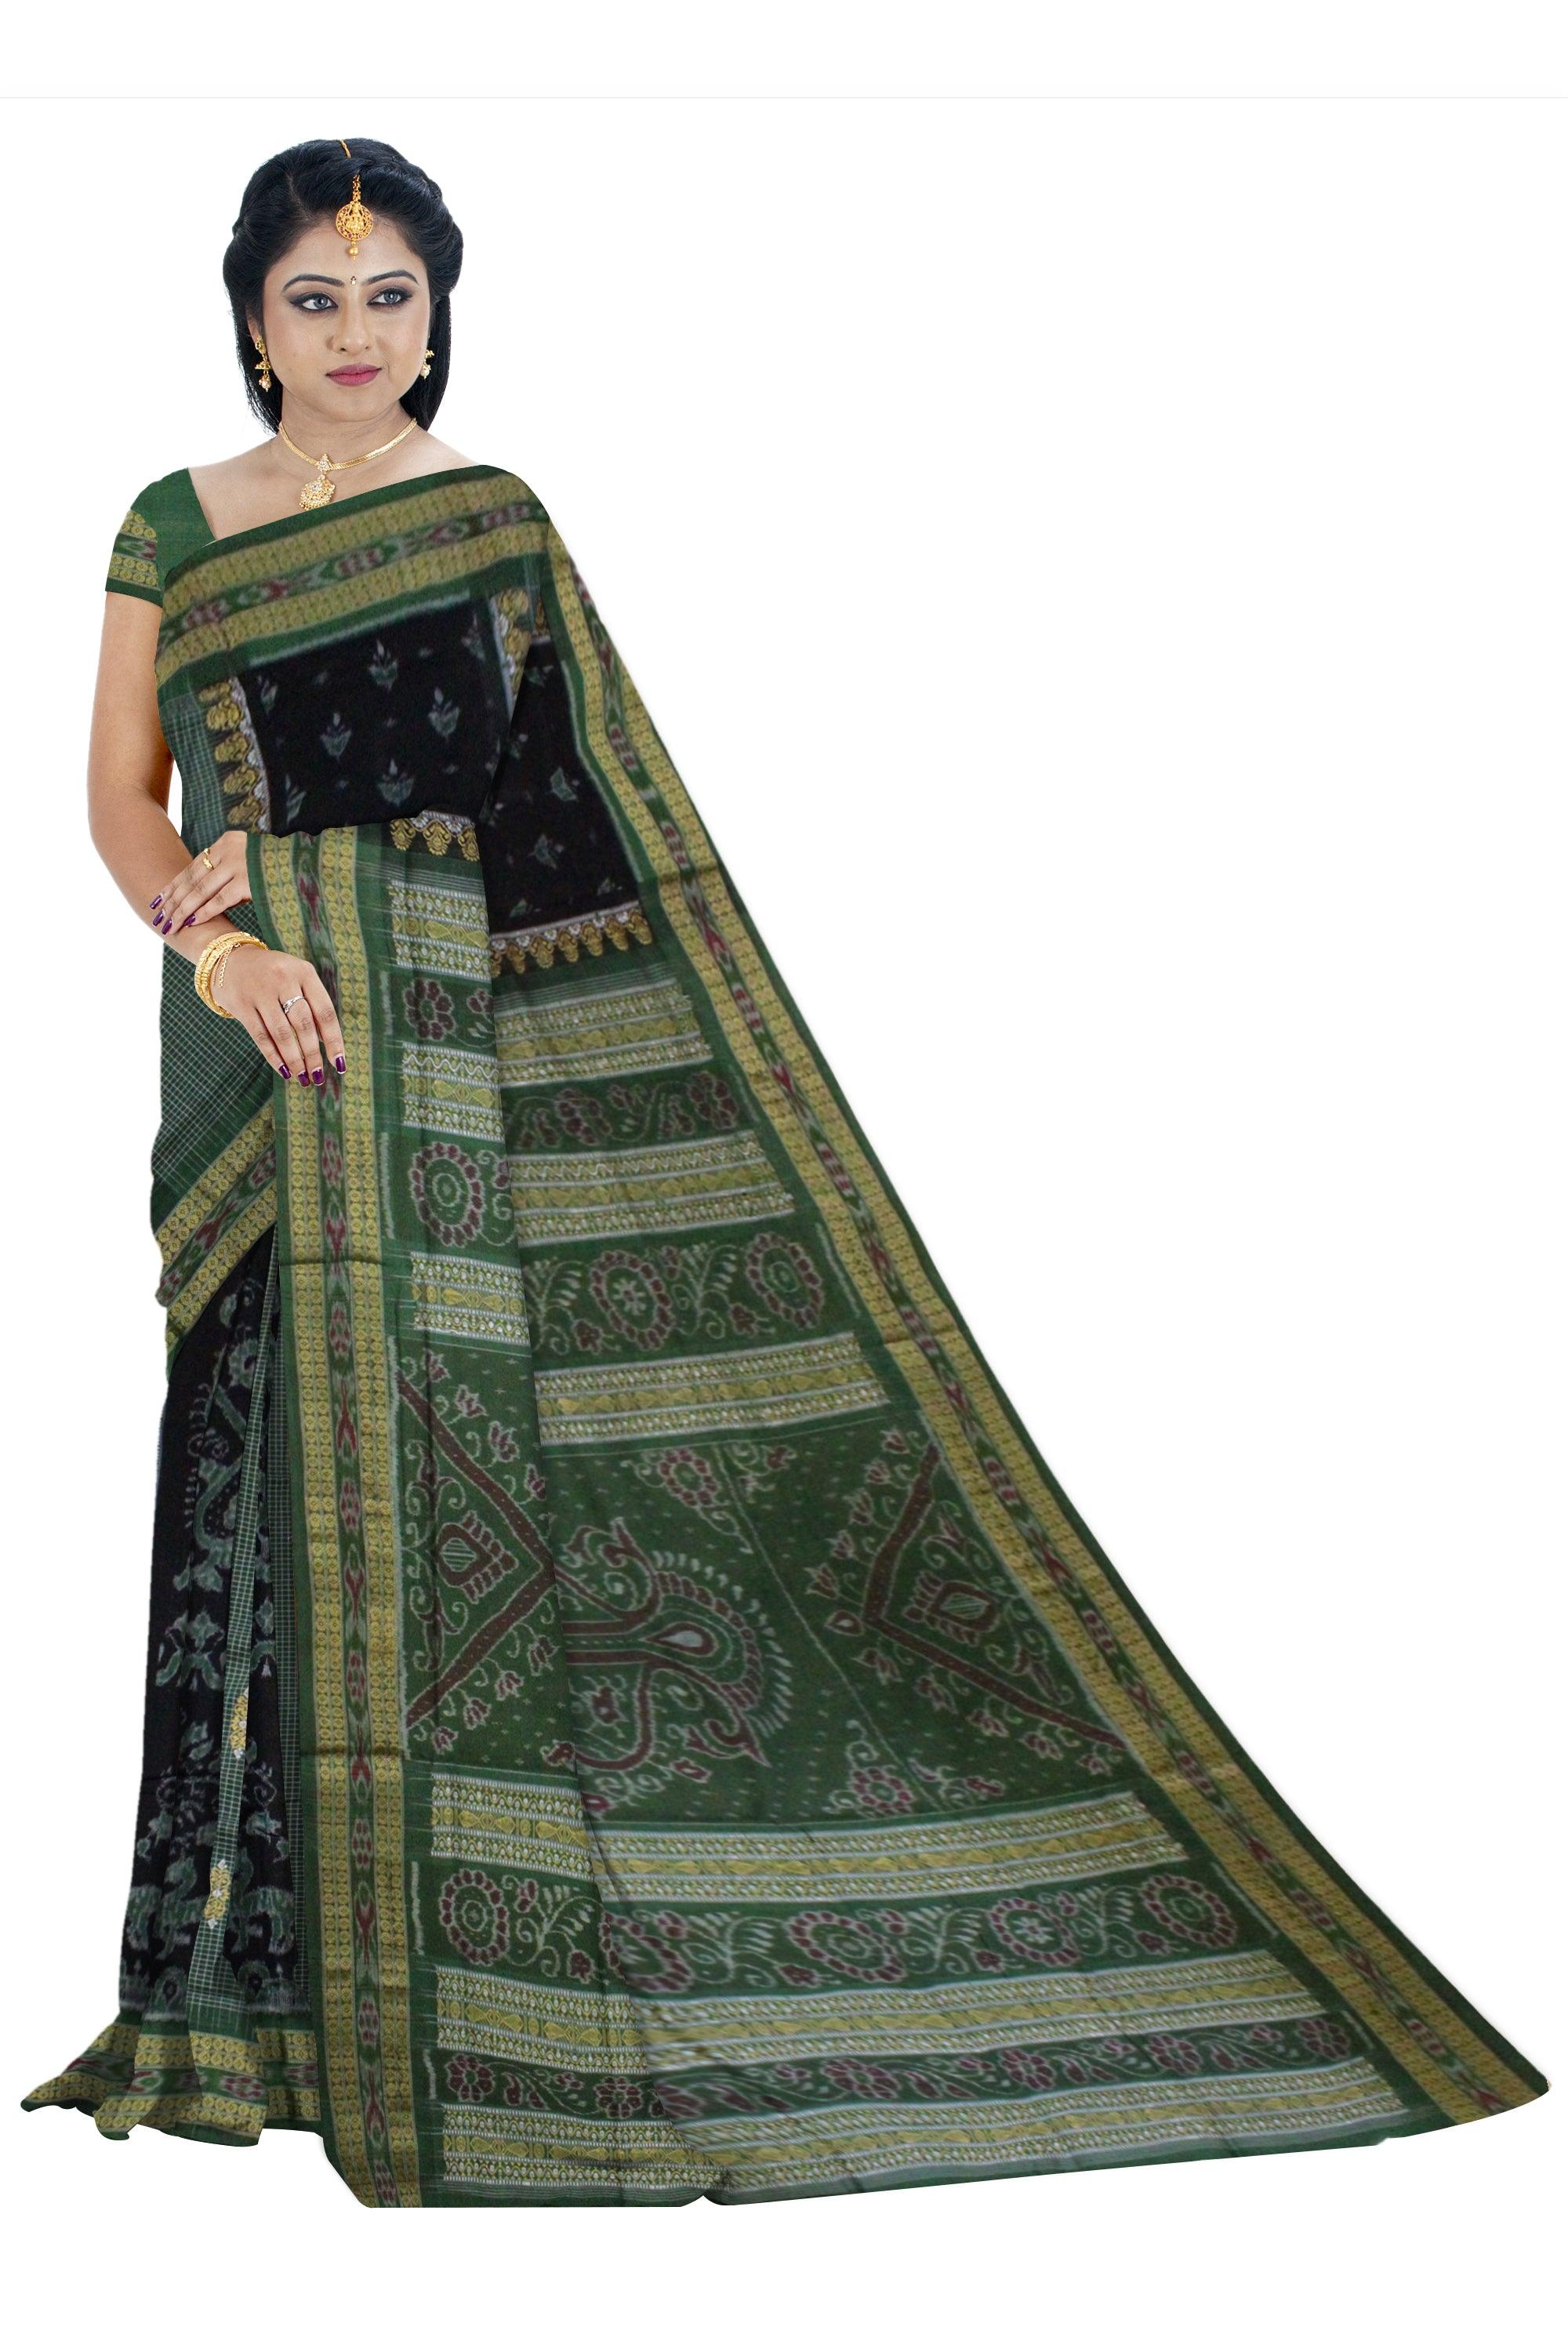 Paper Bandha Sambalpuri saree Bomkai Design in Green and Black Colour - Koshali Arts & Crafts Enterprise